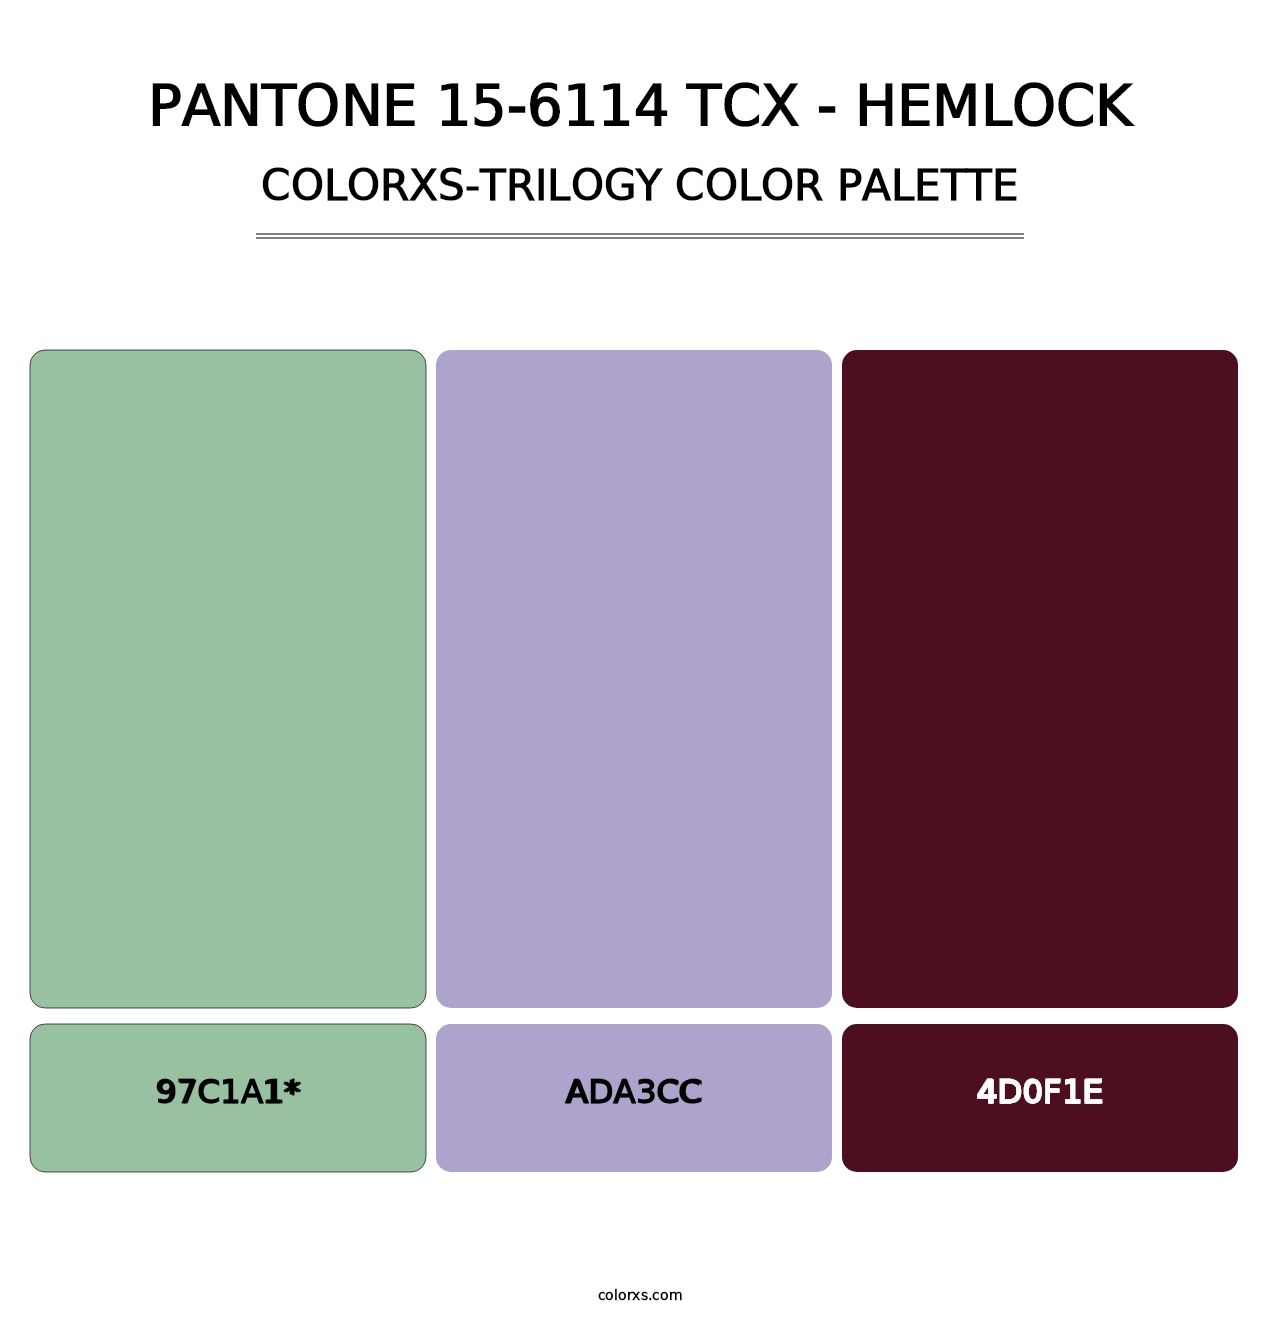 PANTONE 15-6114 TCX - Hemlock - Colorxs Trilogy Palette